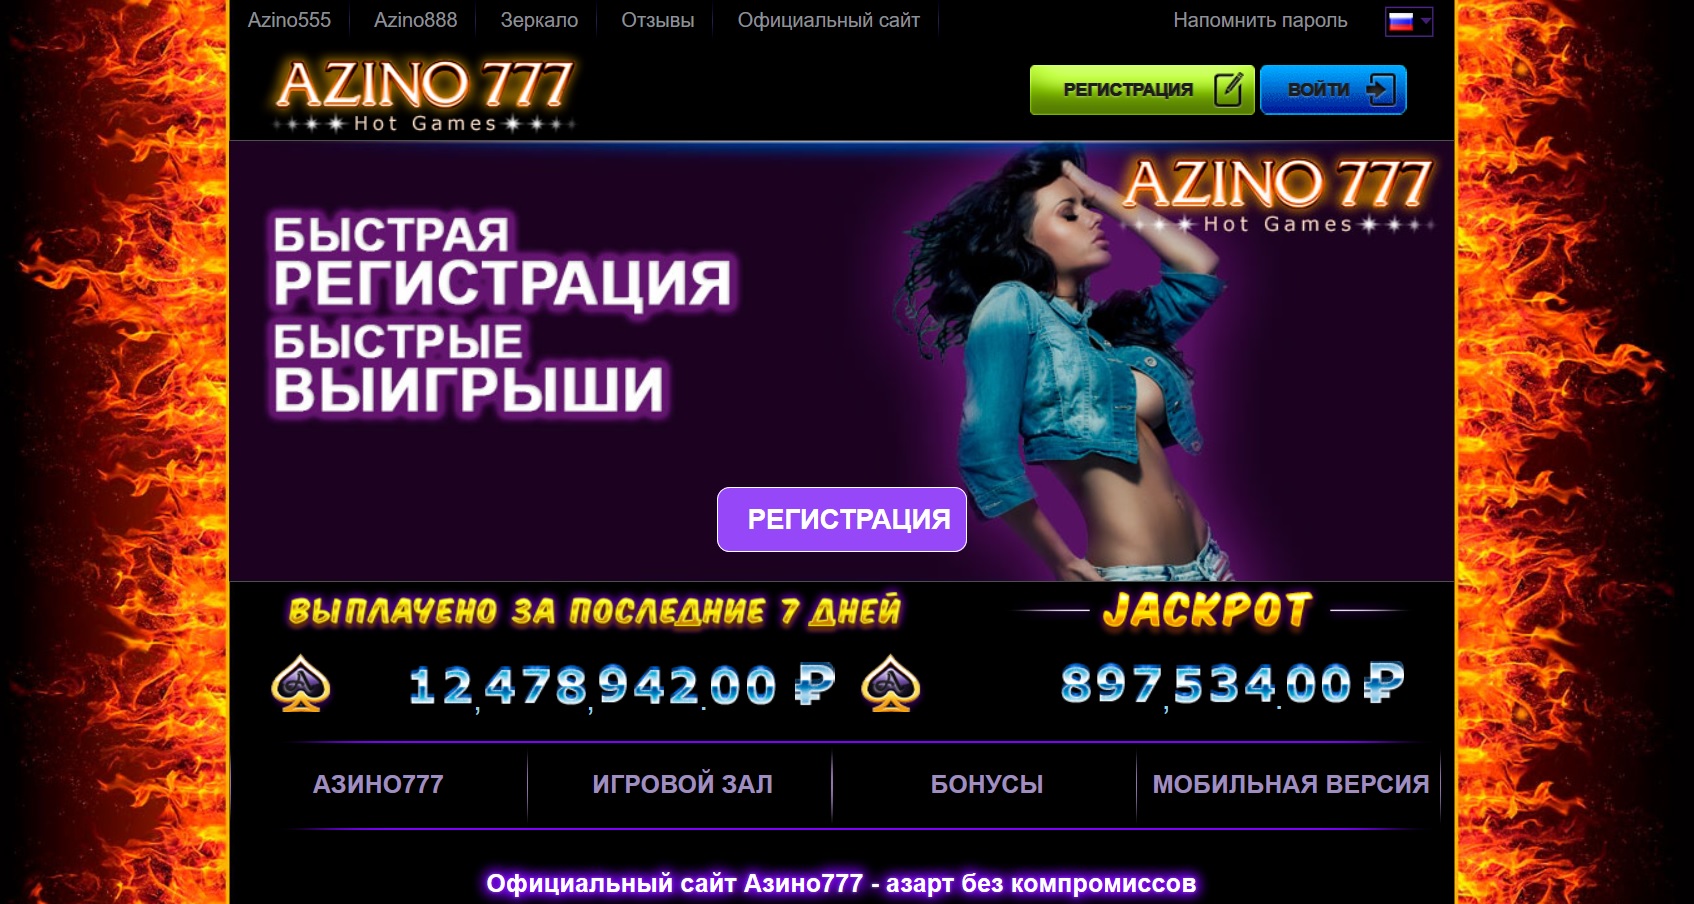 Популярность казино Азино 777